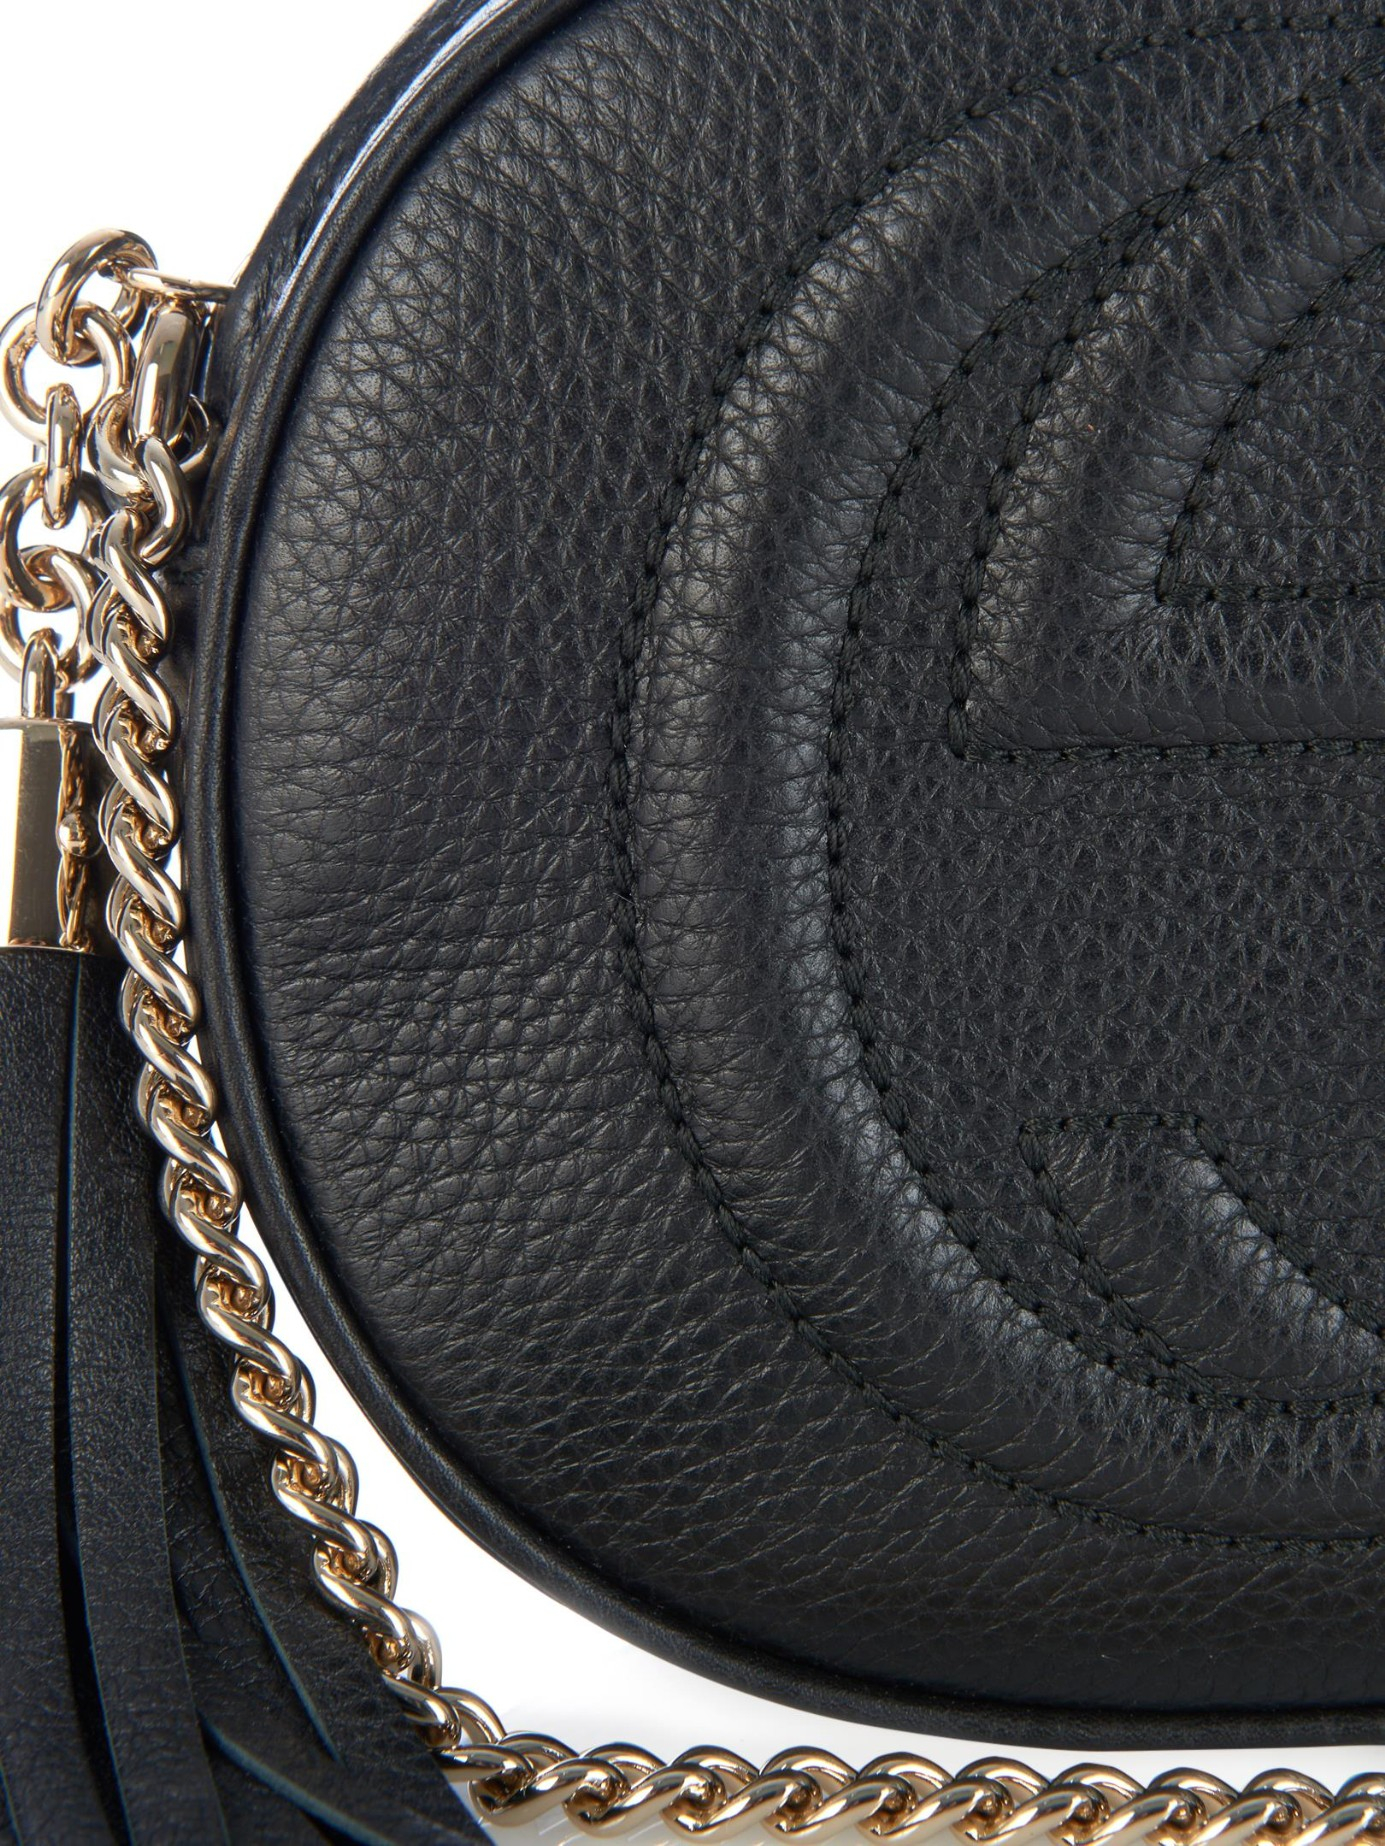 Gucci Mini Soho Chain-Strap Cross-Body Bag in Black - Lyst